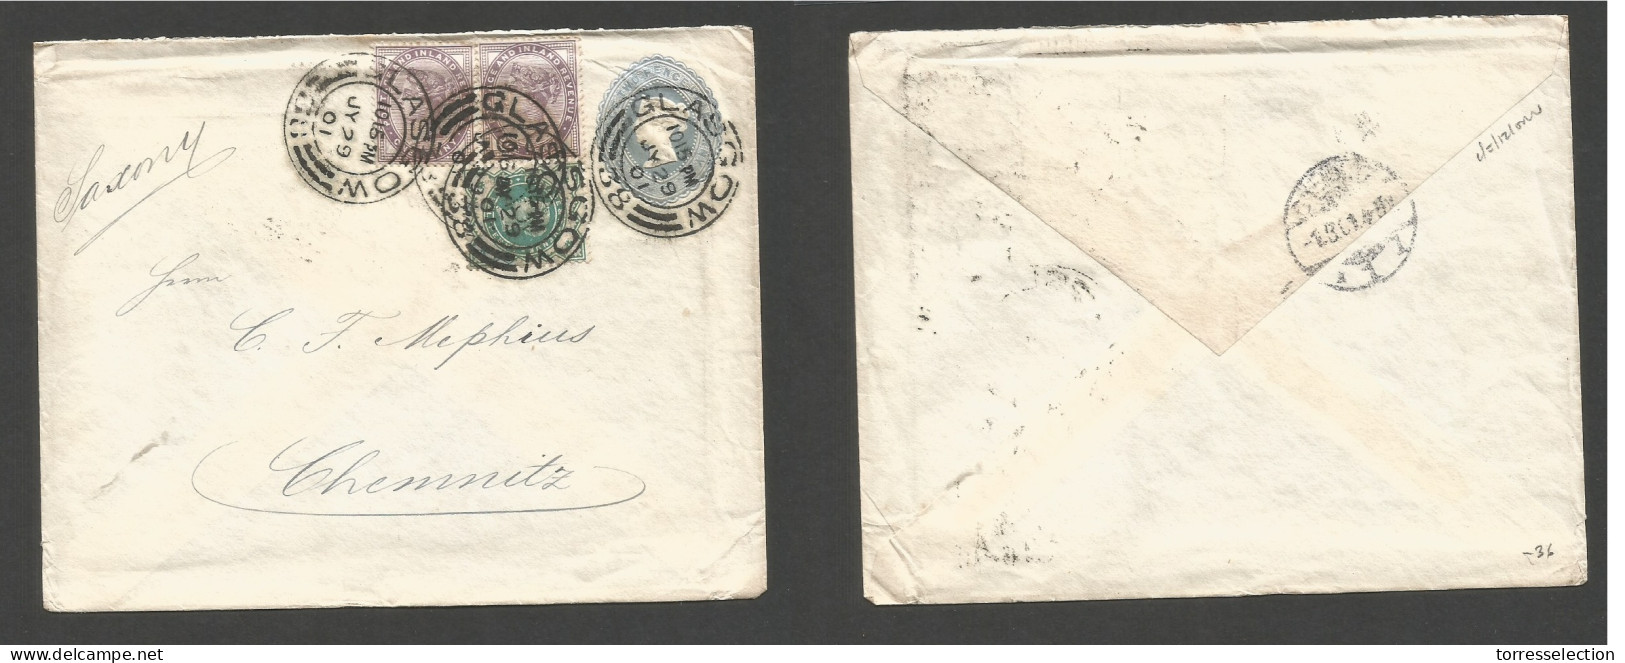 Great Britain - Stationery. 1901 (29 July) Glasgow, Scotland - Germany, Chemnitz, Saxony. 2d Grey Blue Stat Env + 3 Adtl - ...-1840 Precursores